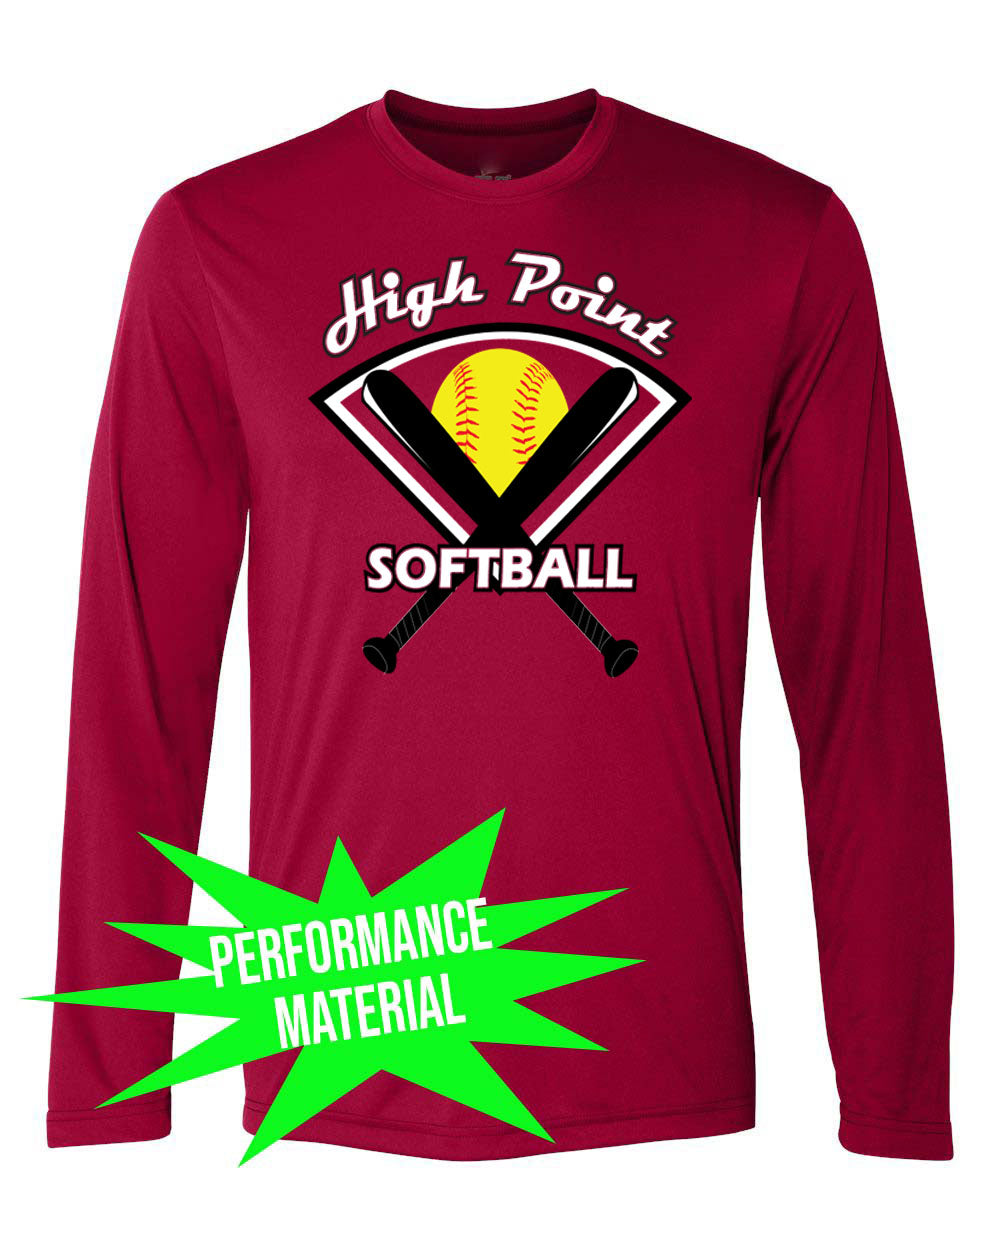 High Point Softball Performance Material Design 4 Long Sleeve Shirt